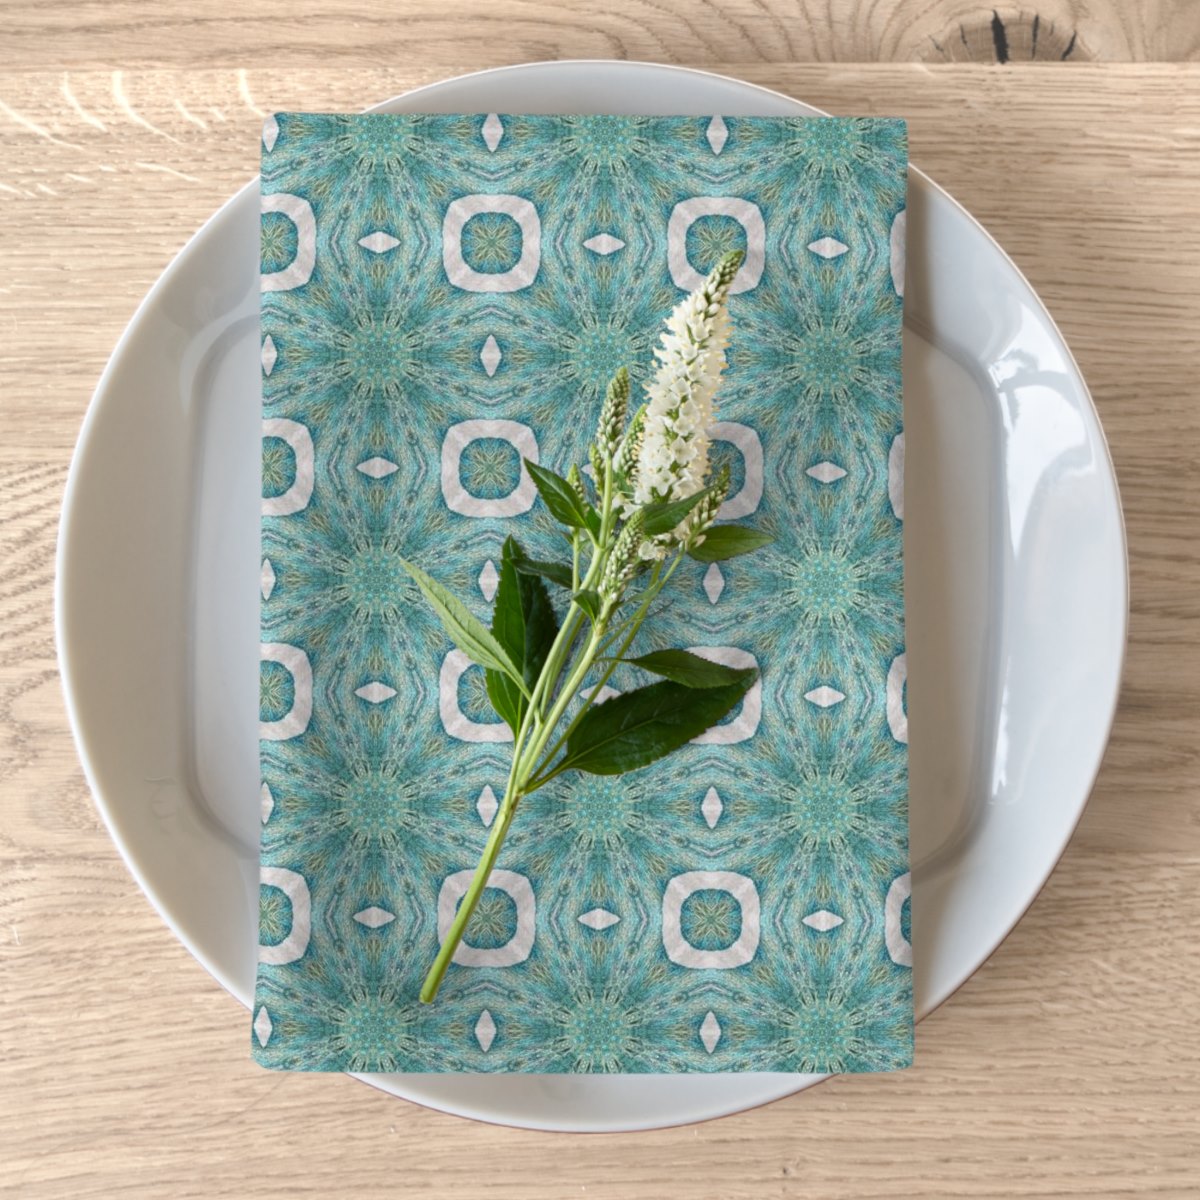 beautiful designed cloth napkins